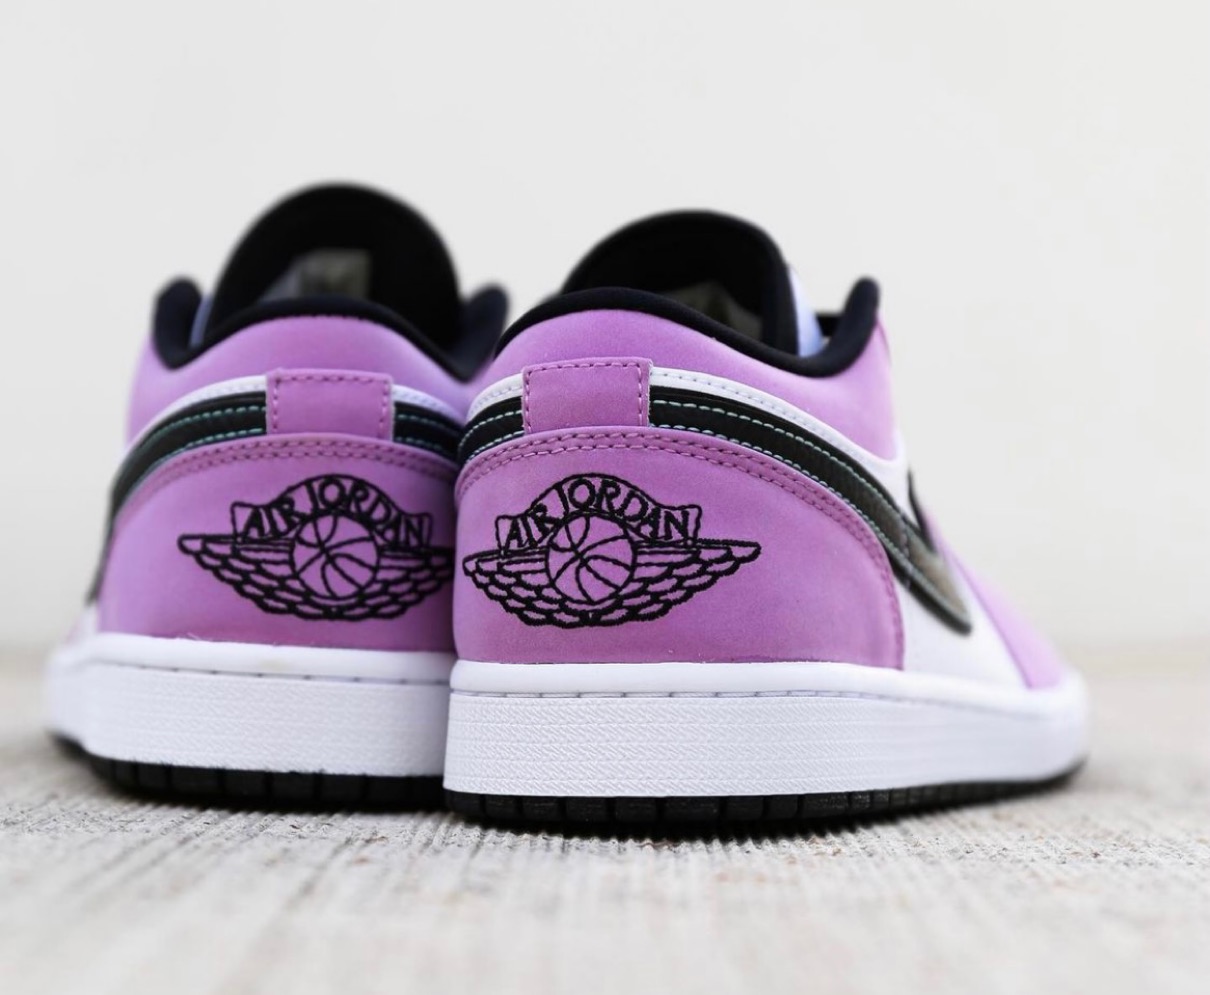 Nike】Air Jordan 1 Low SE “Violet Shock”が国内5月29日に再発売予定 | UP TO DATE